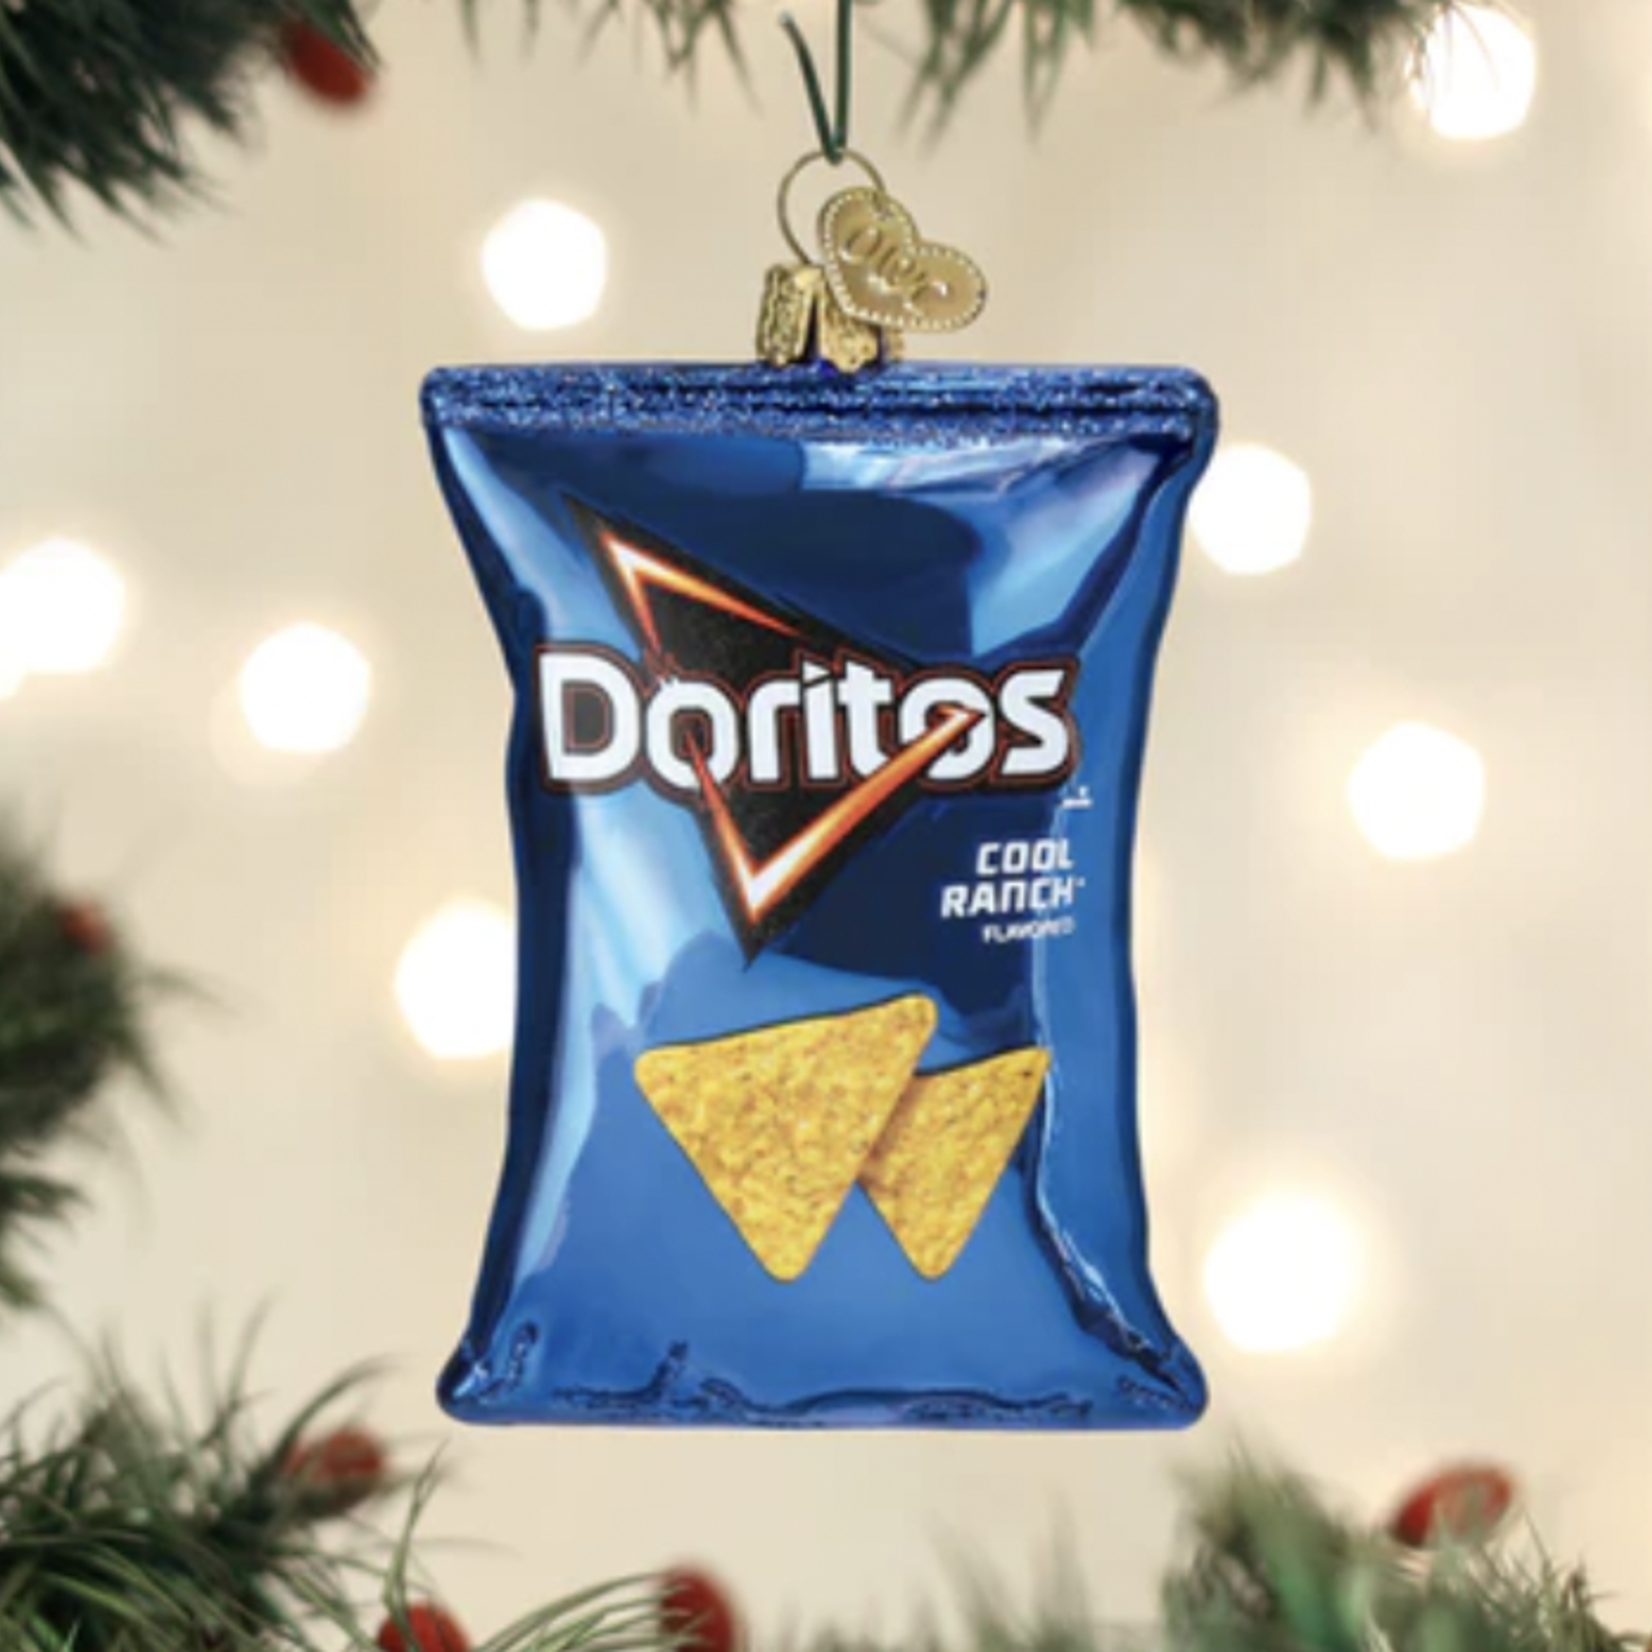 Doritos Cool Ranch Chips Ornament